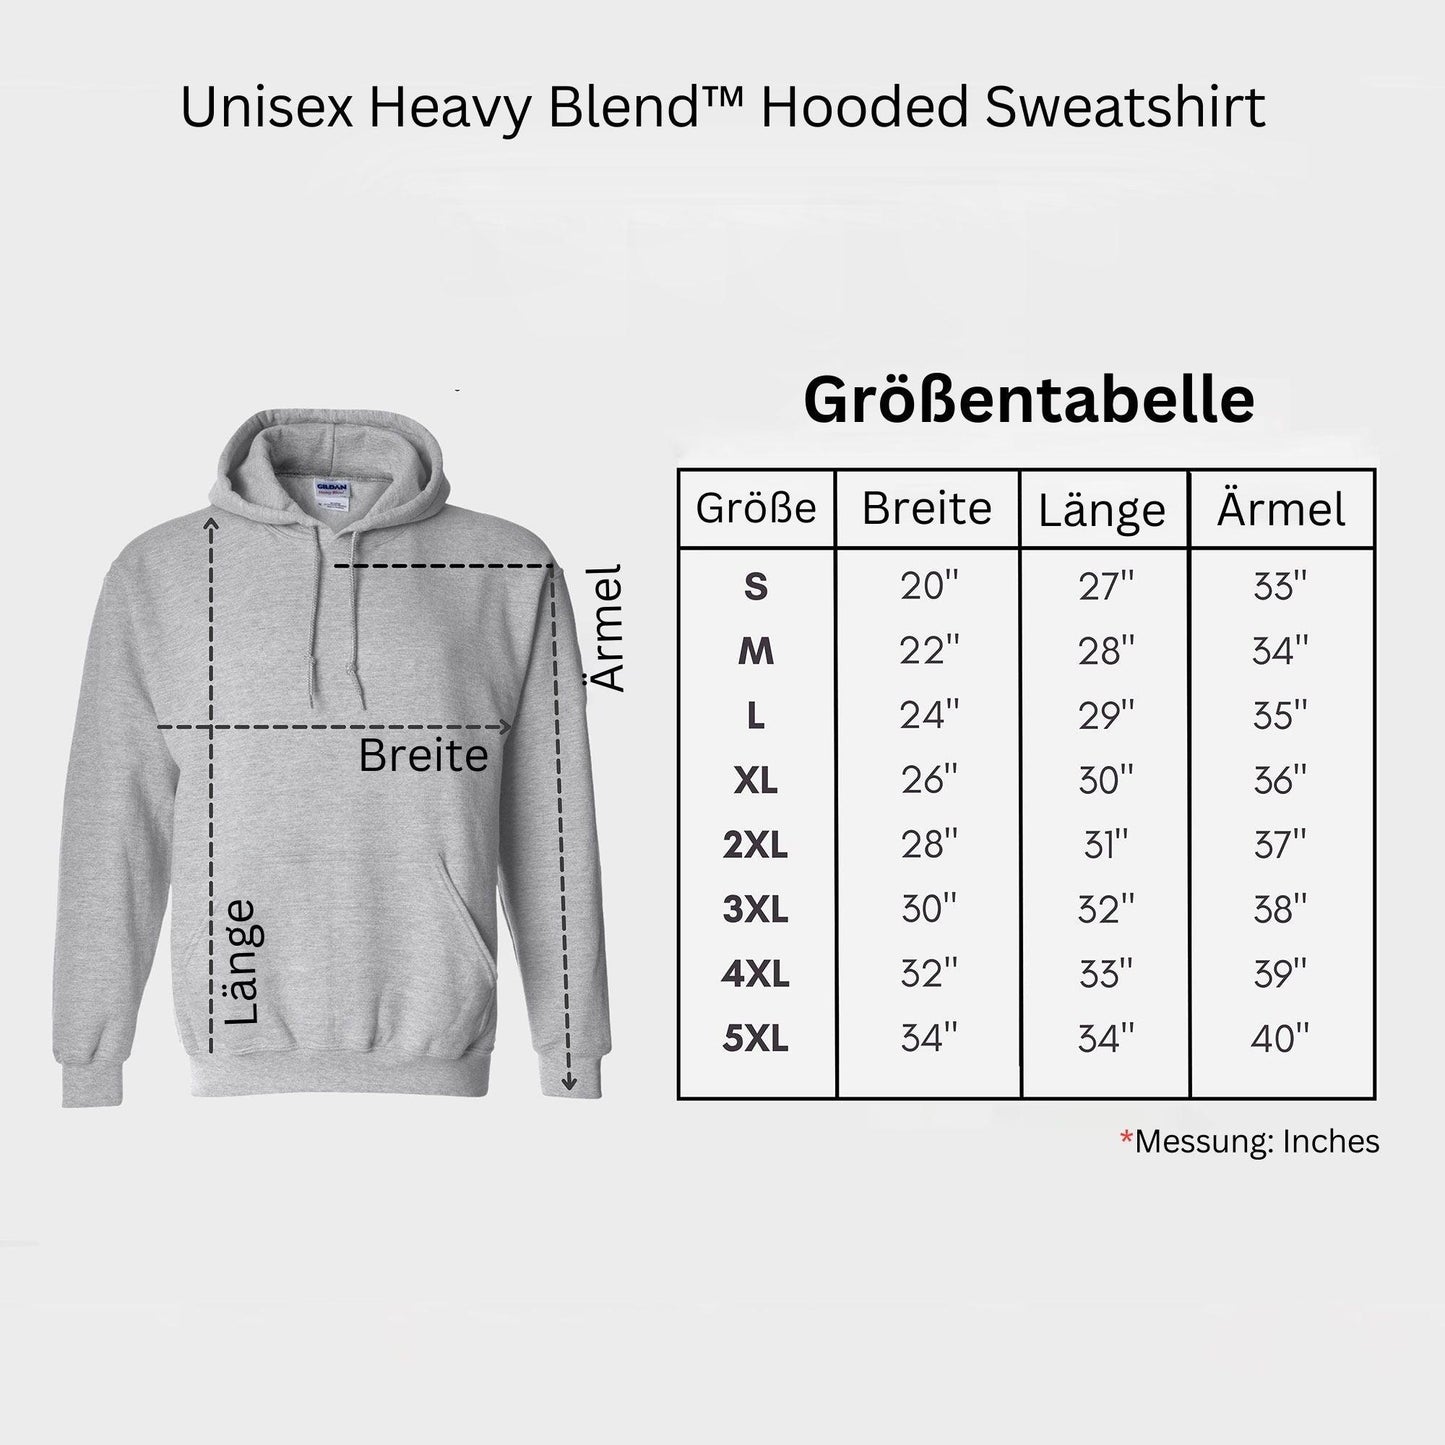 Grandma Bear - Personalisiertes Oma Bär Sweatshirt und Hoodie - GiftHaus